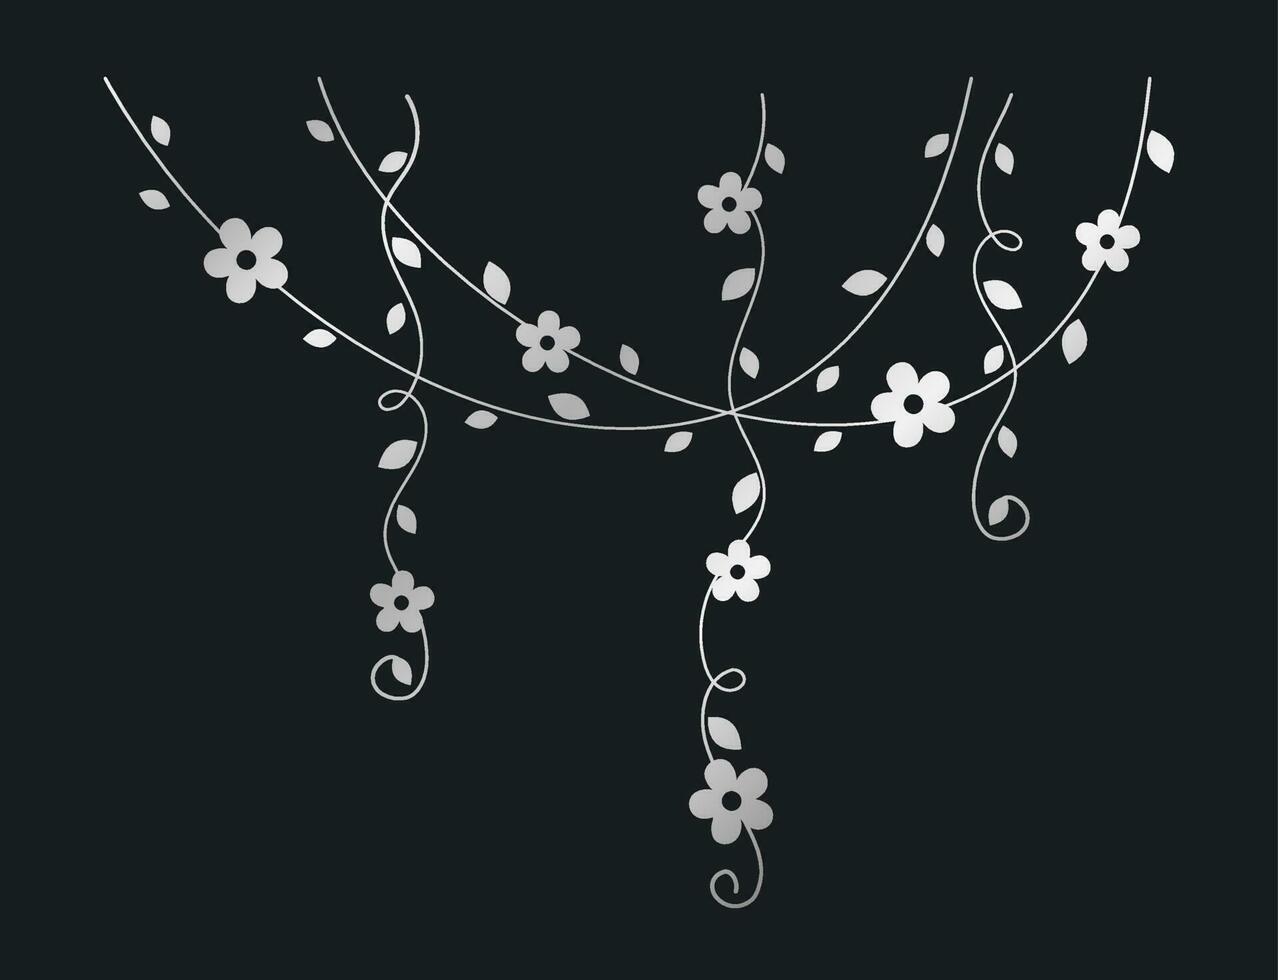 plata vides con flores vector ilustración. sencillo mínimo dorado floral botánico cortina diseño elementos para primavera.